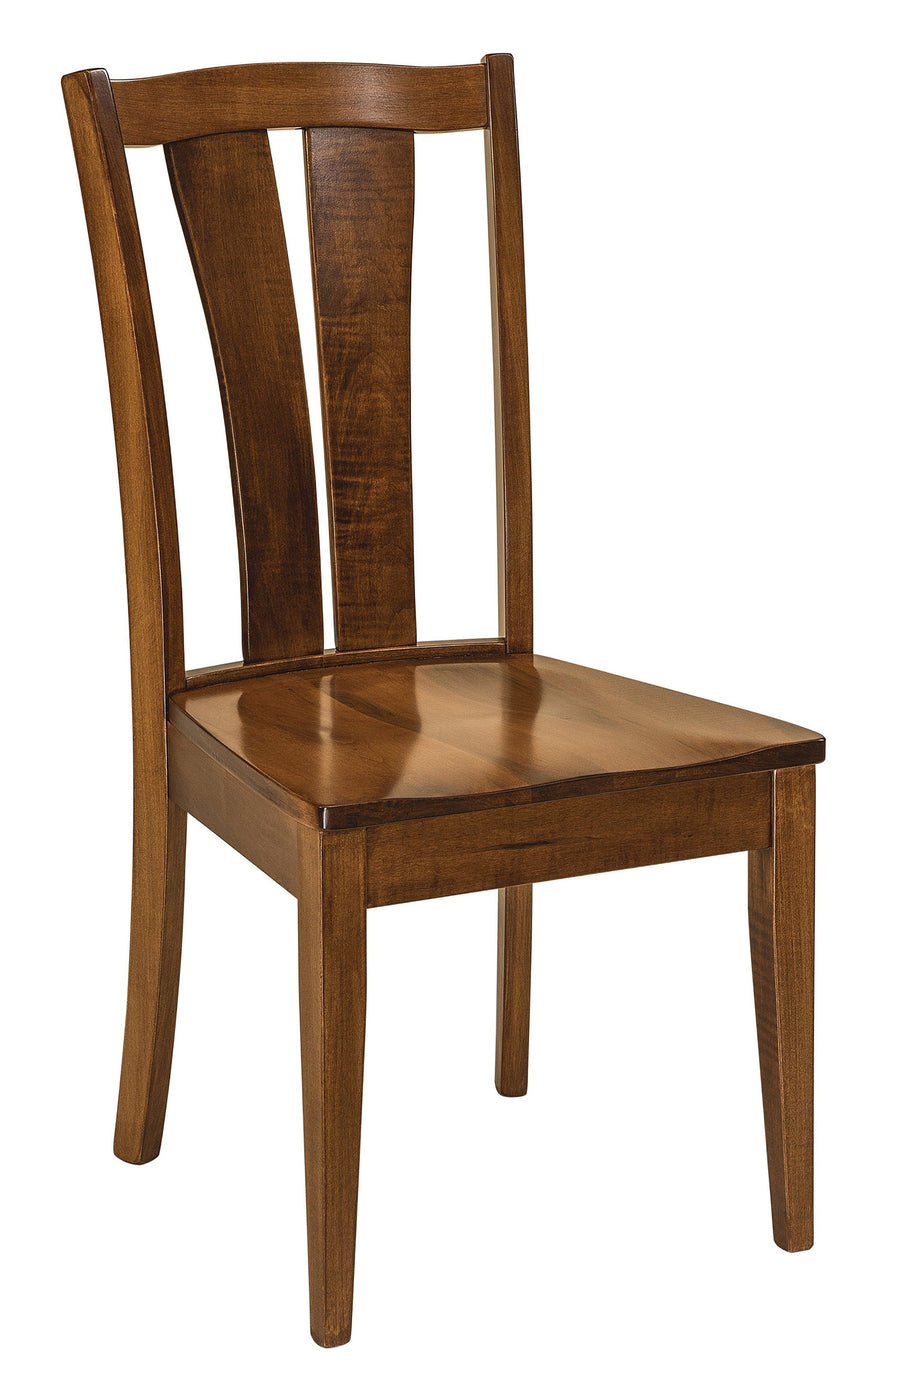 Brawley Amish Side Chair - Charleston Amish Furniture